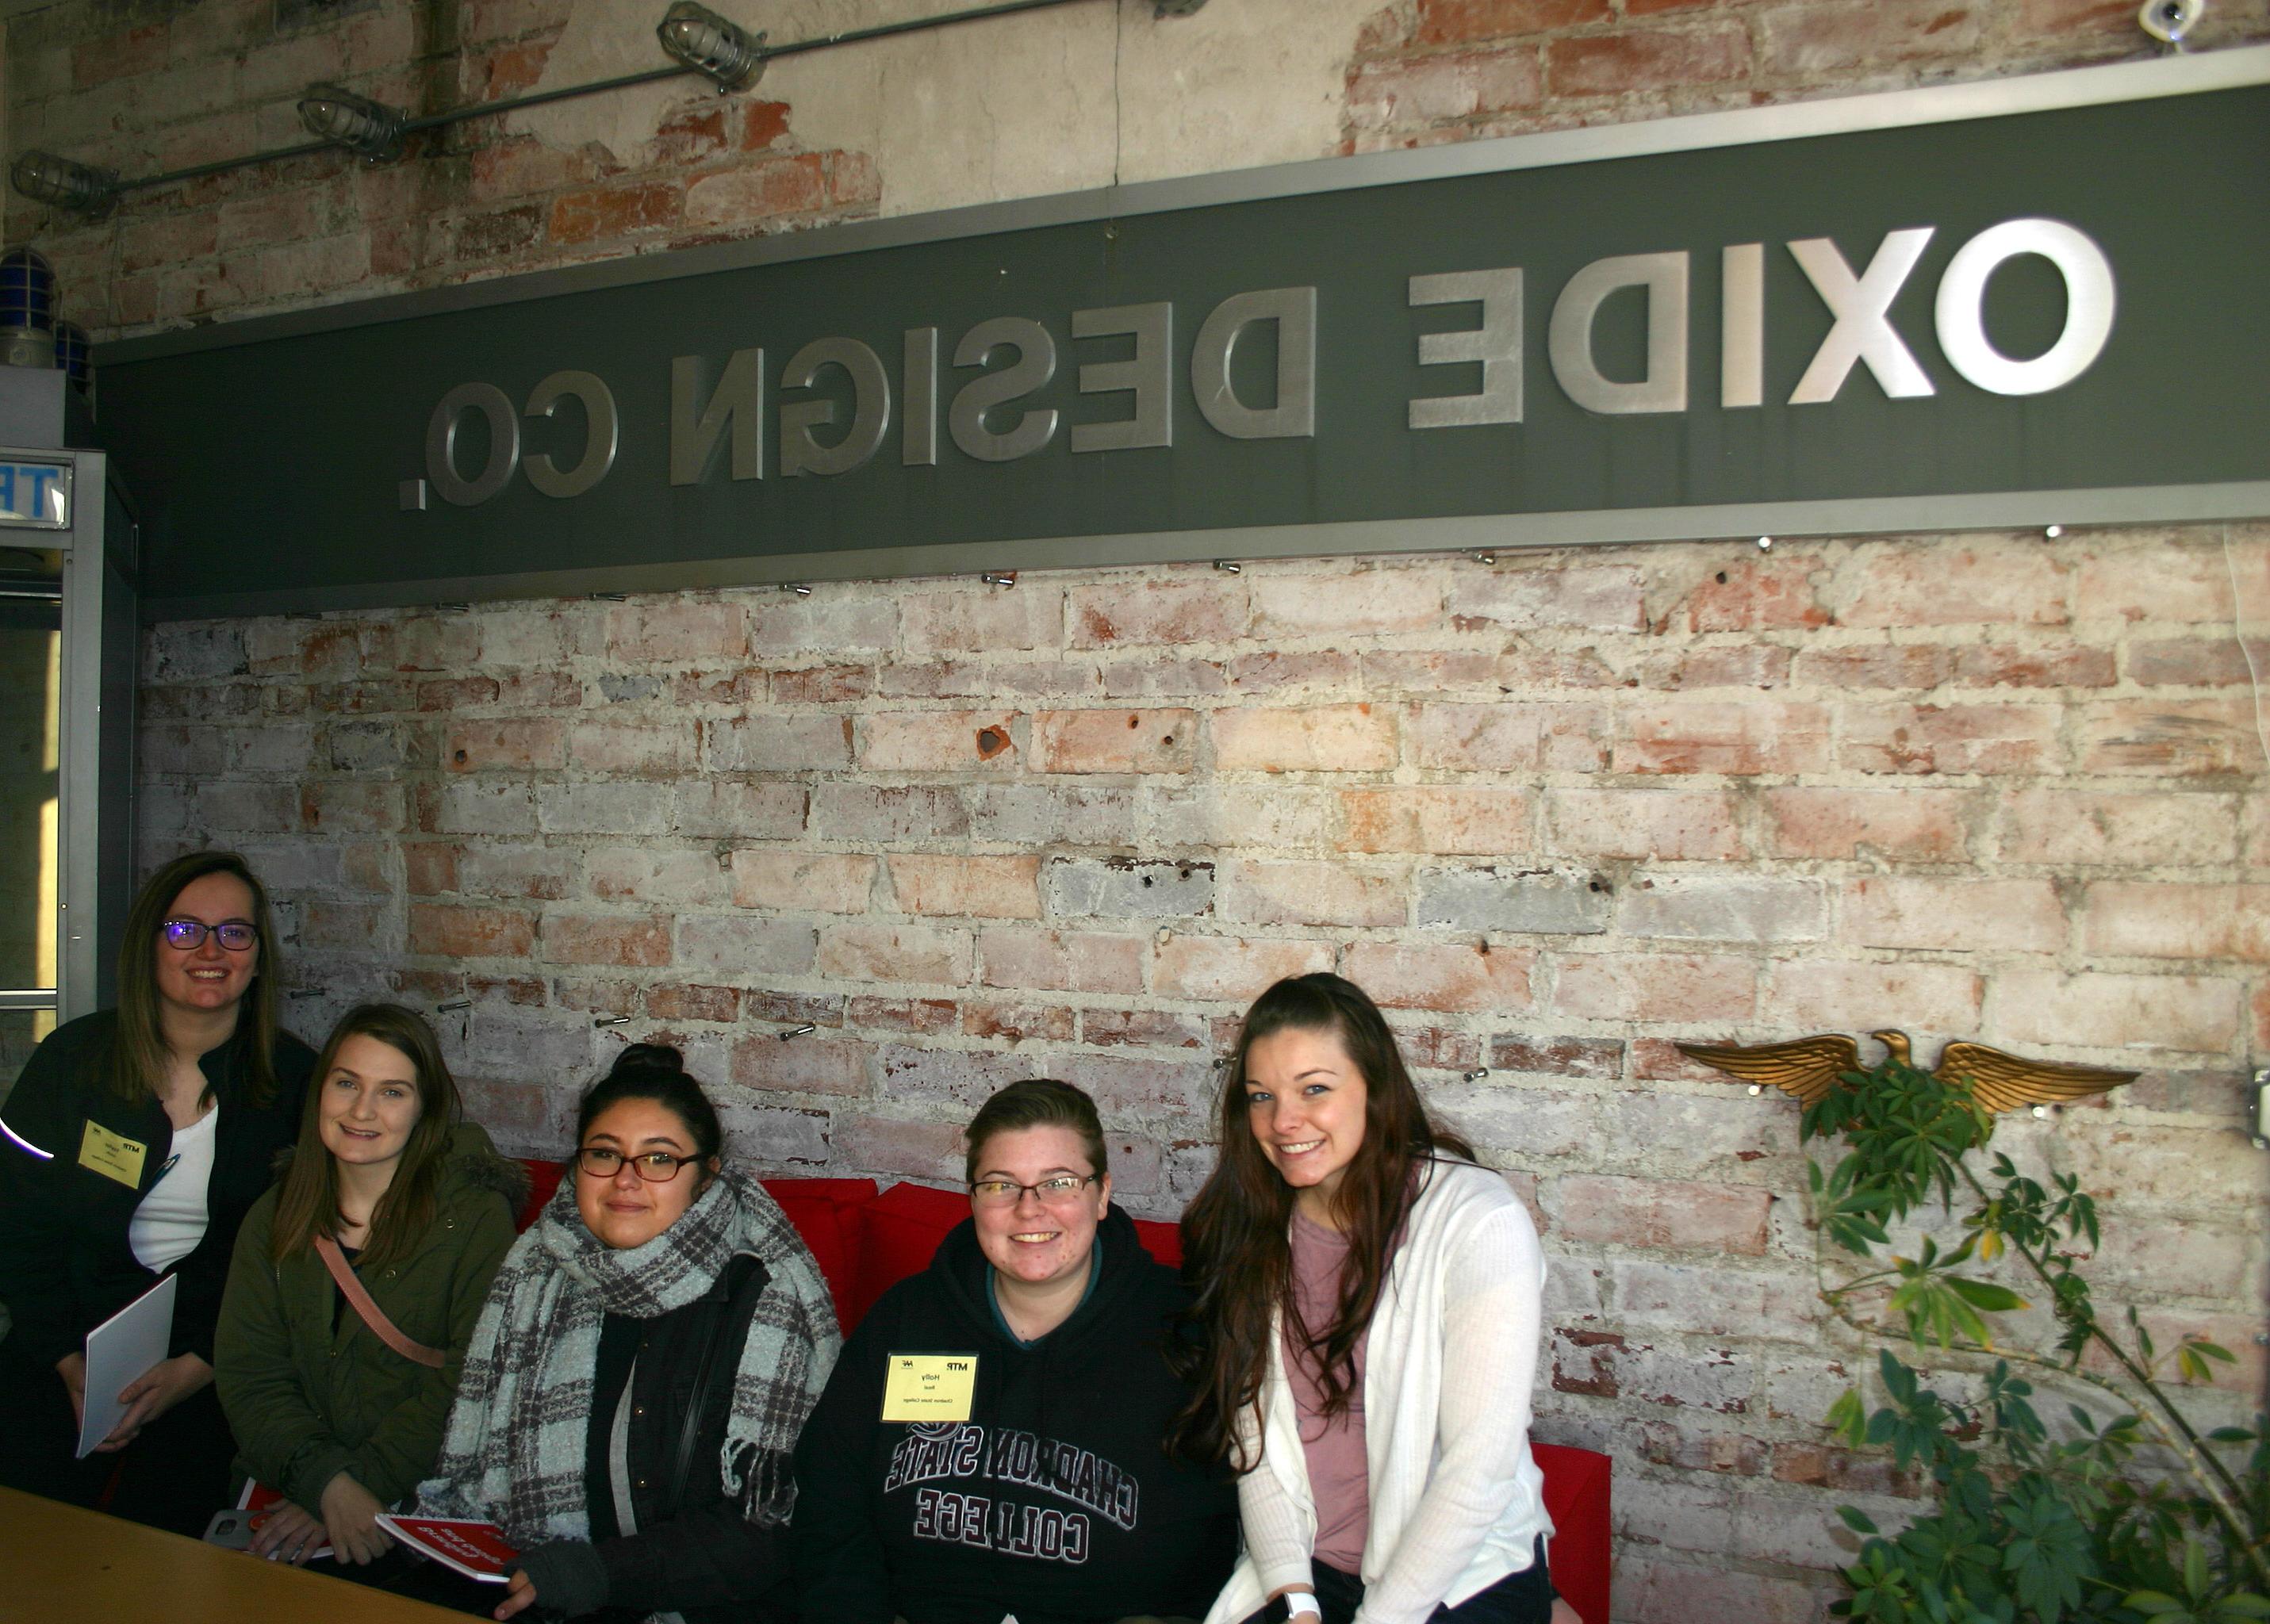 Students at Oxide Design